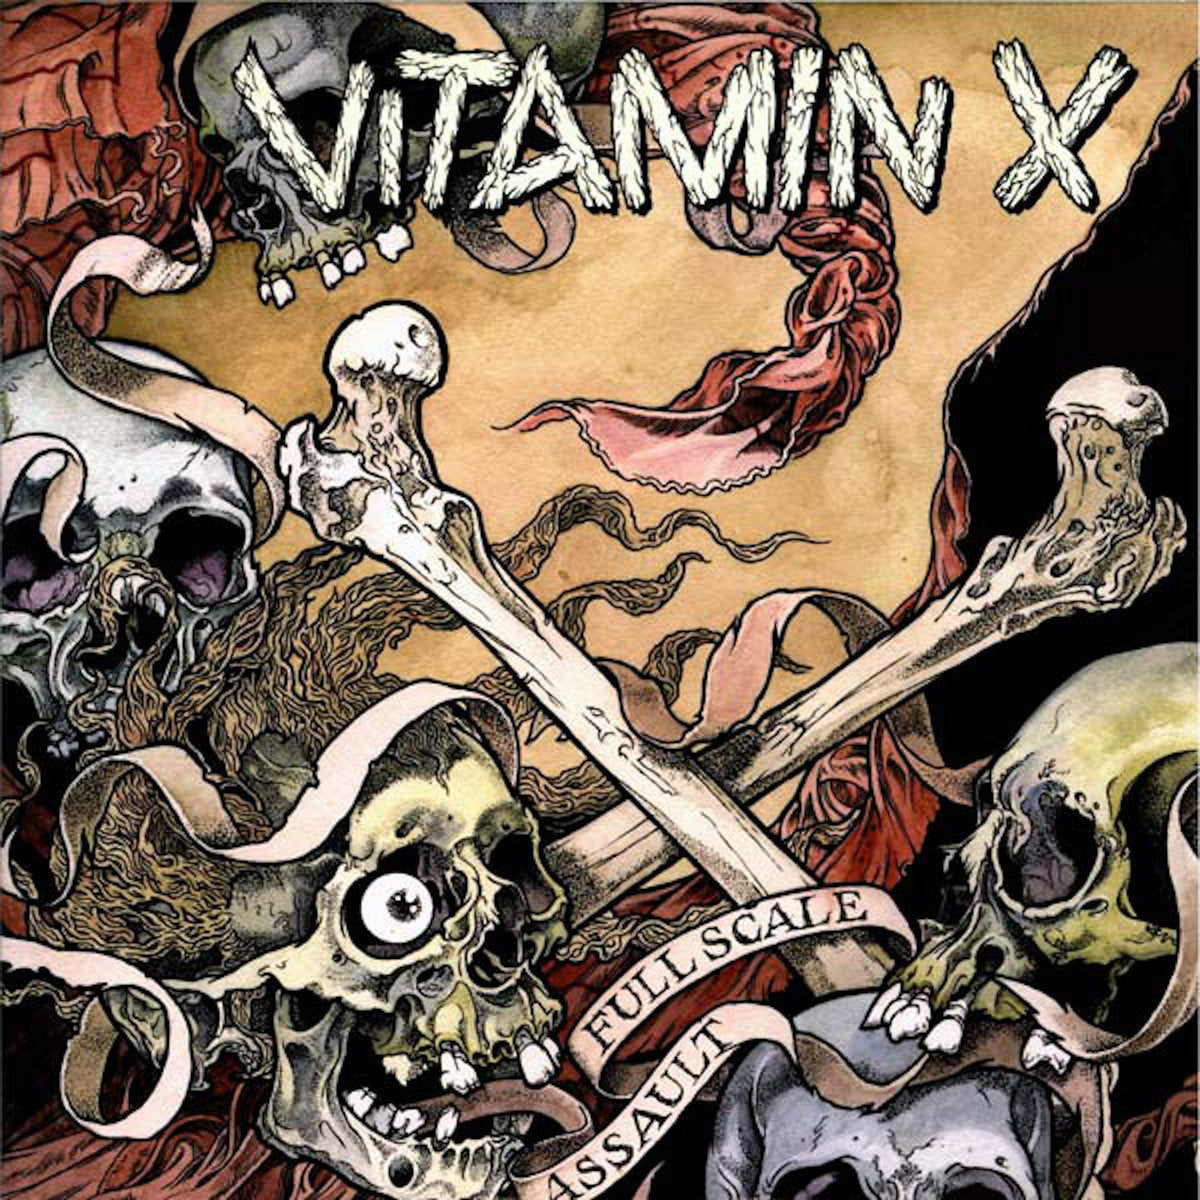 Vitamin X - "Full Scale Assault" 12-Inch